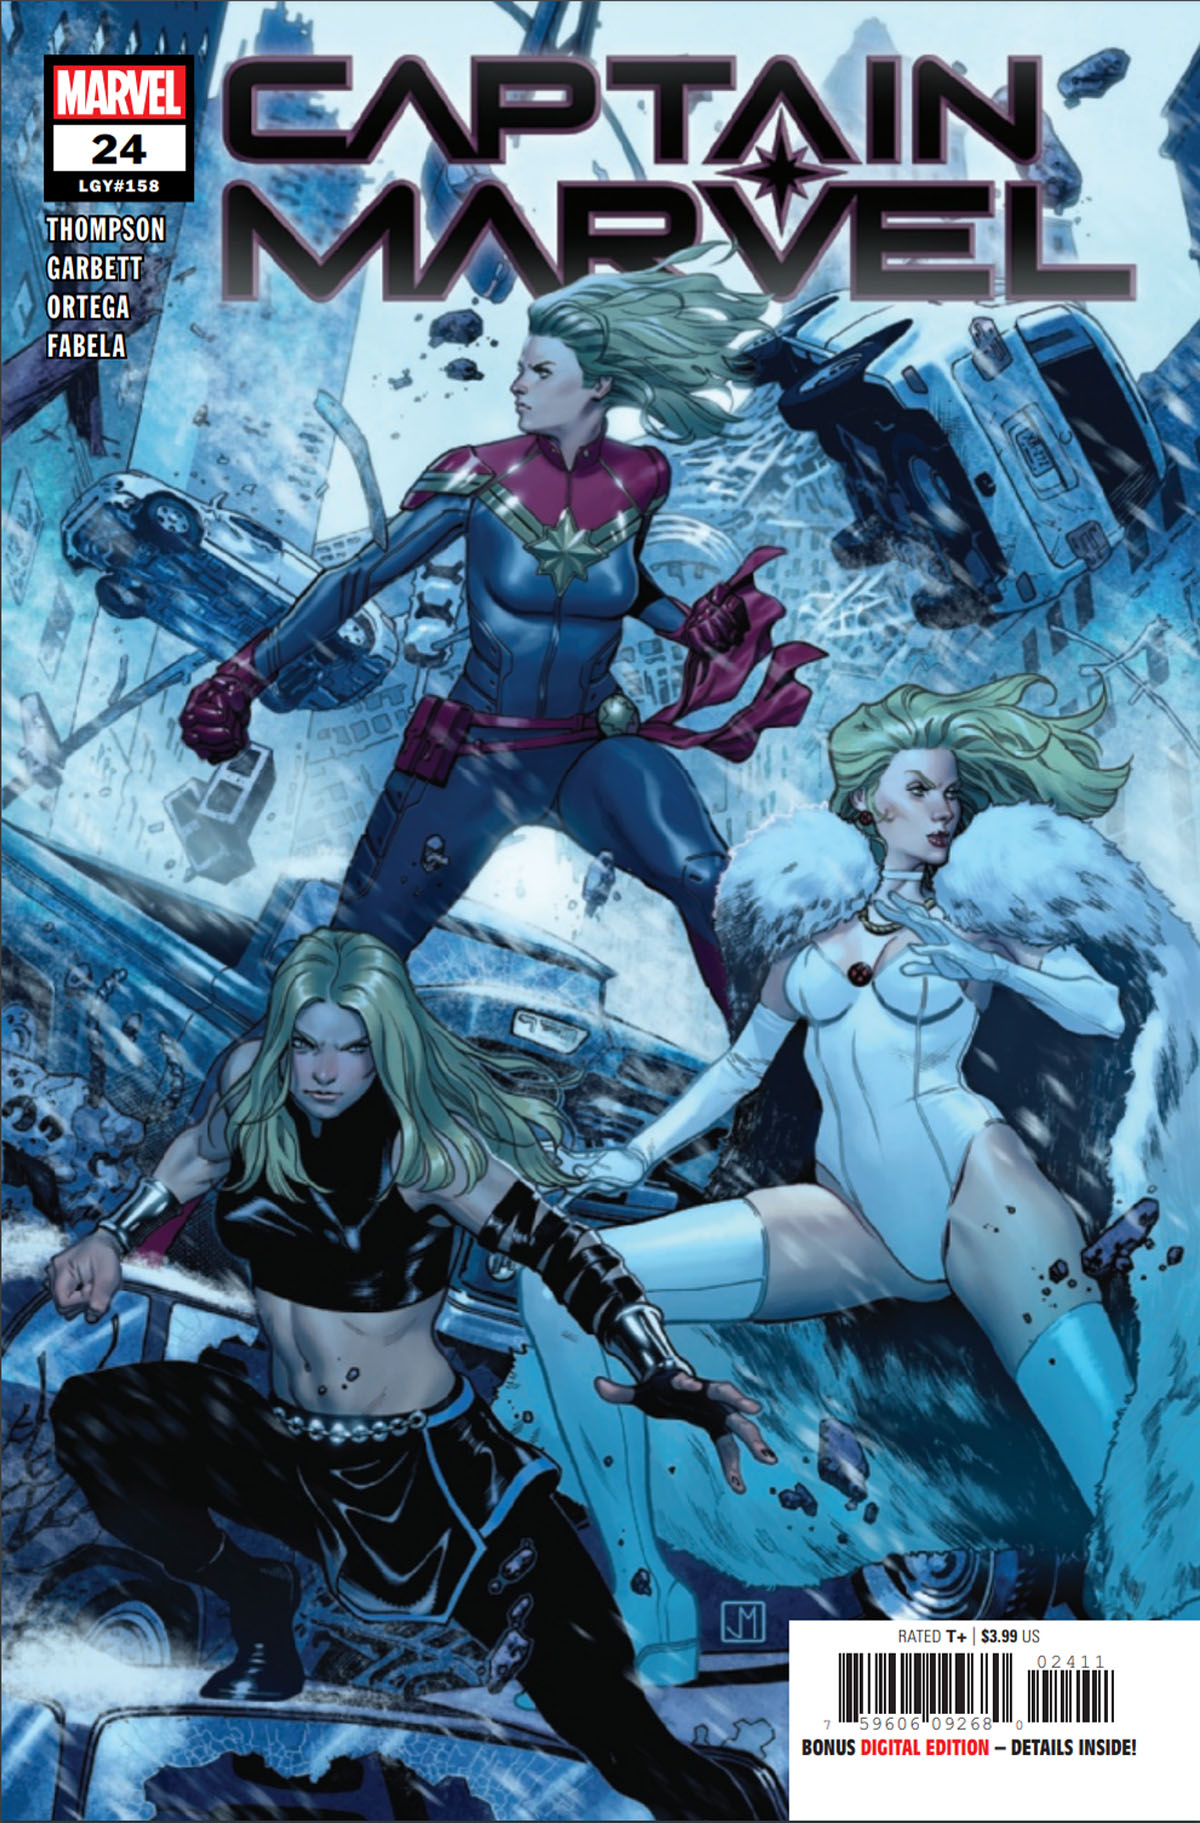 Captain Marvel #24 cover